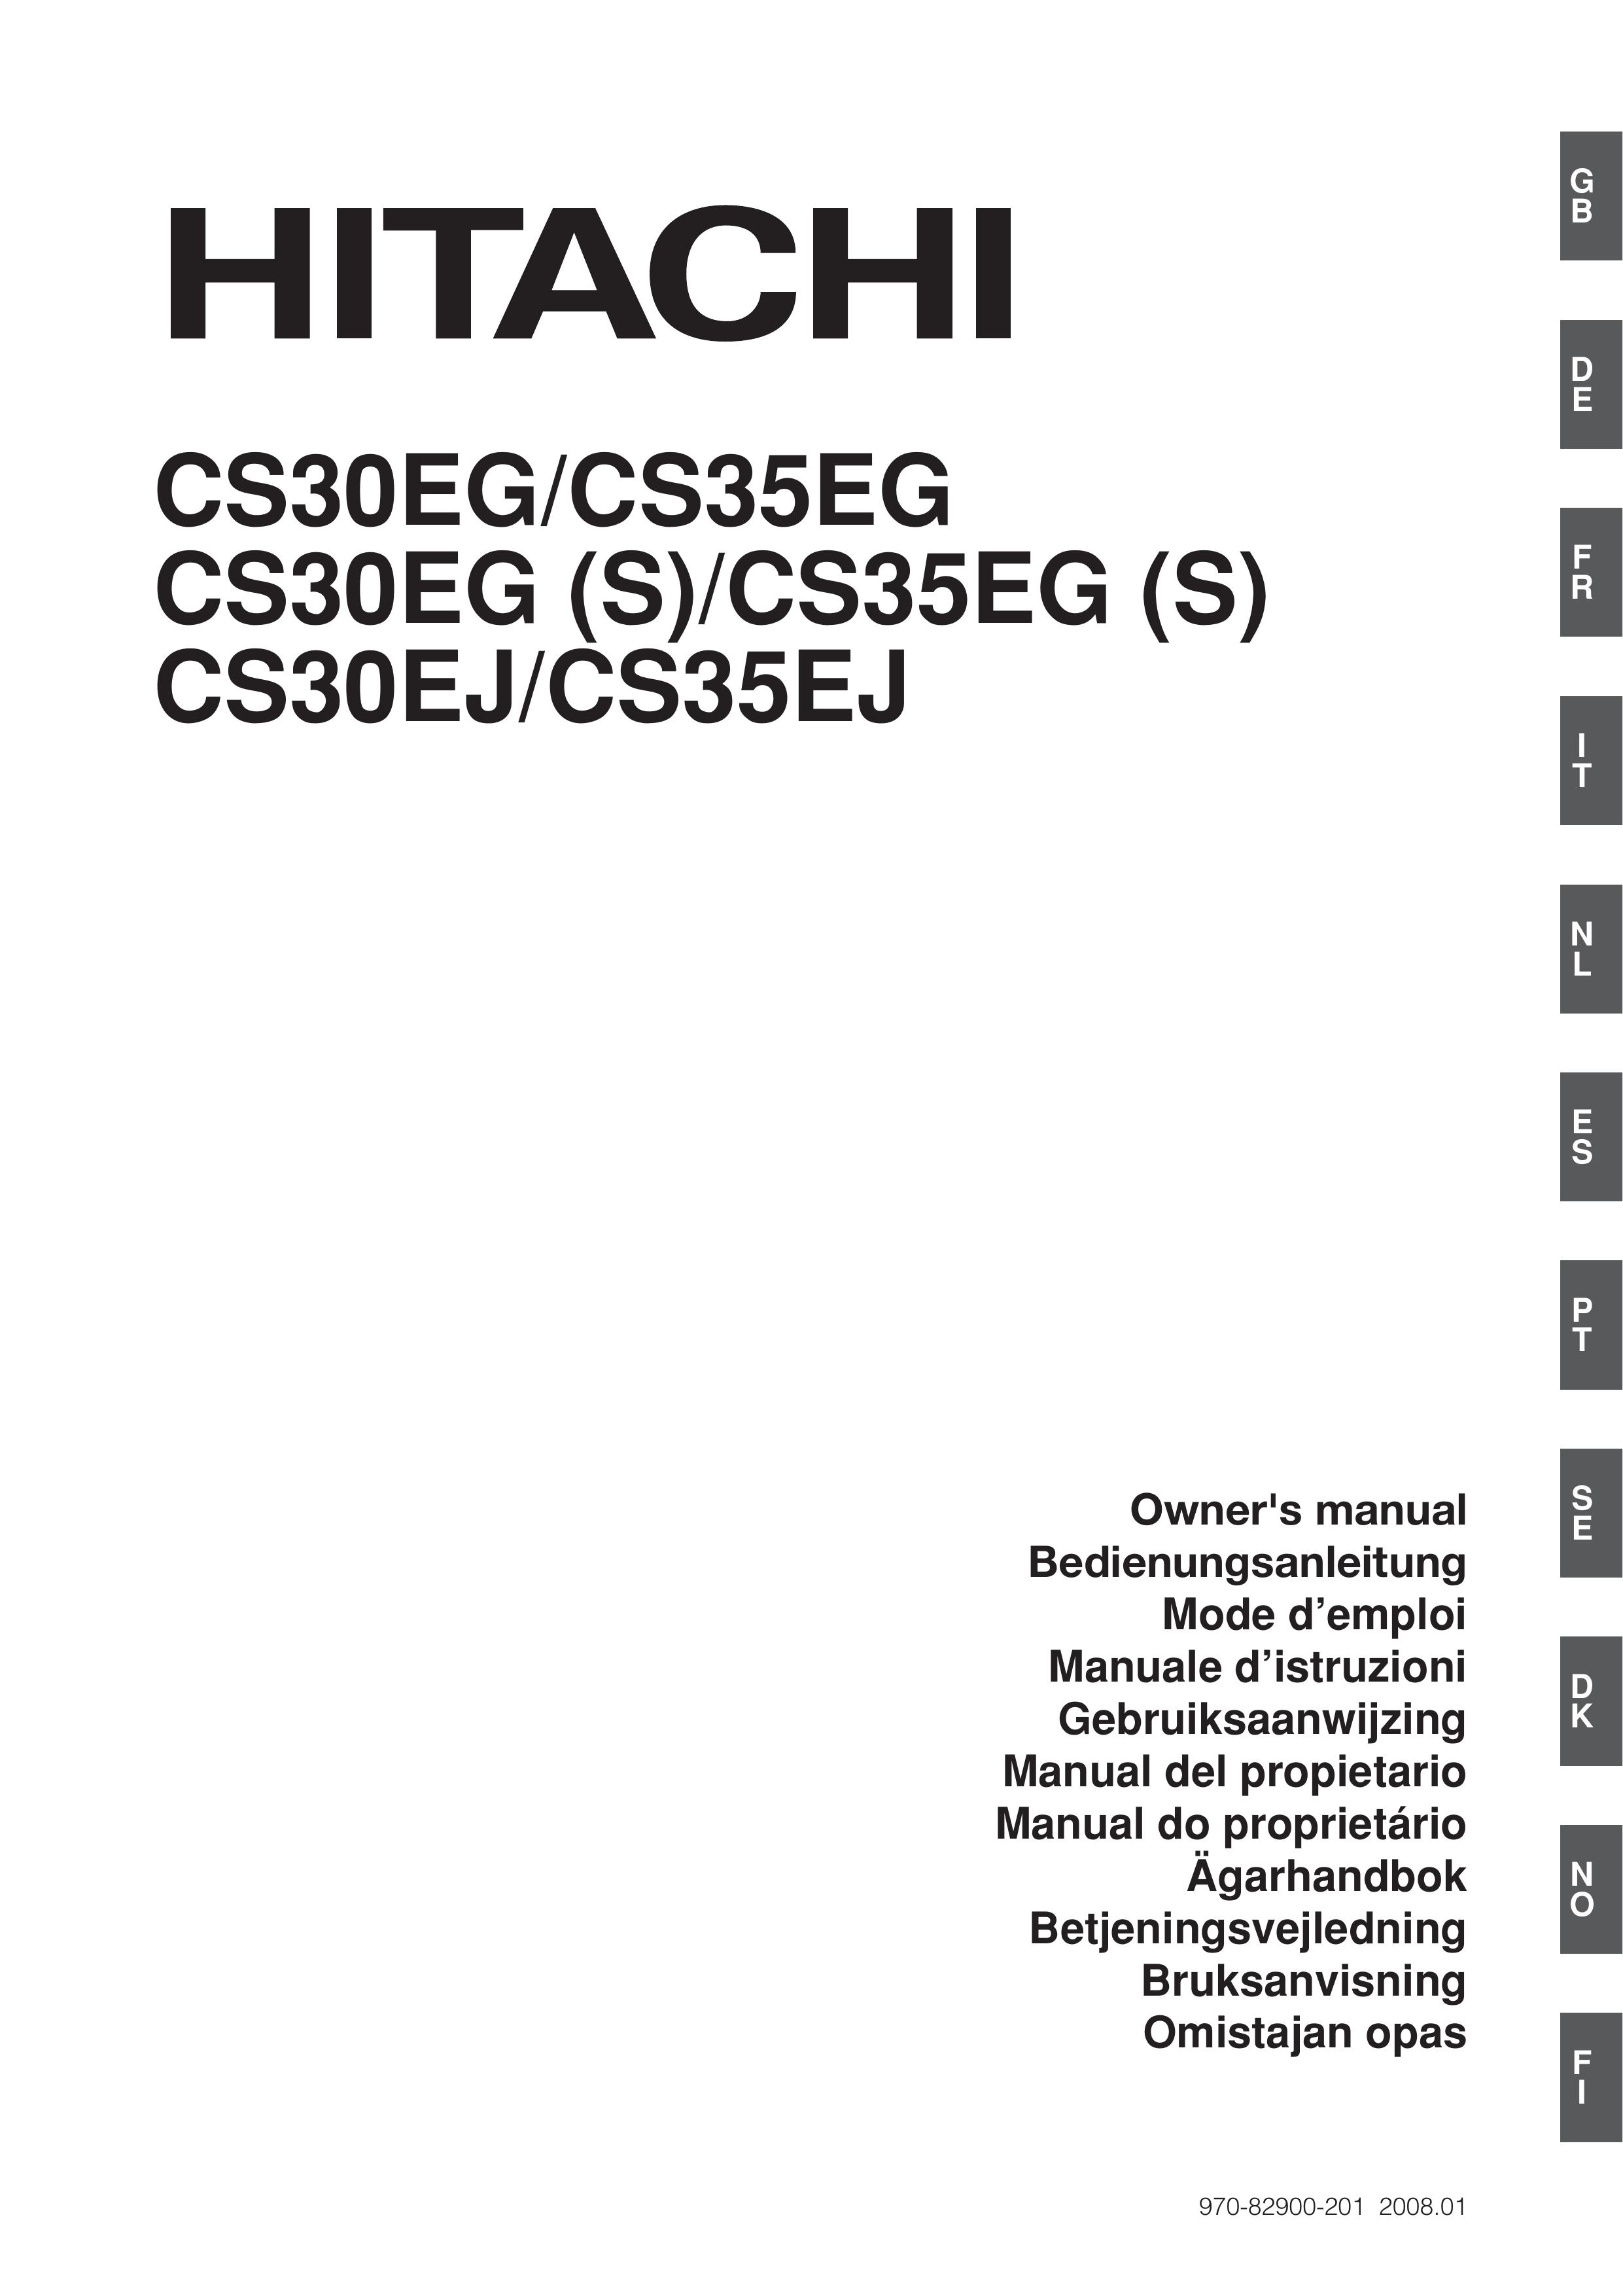 Hitachi CS30EG (S) Chainsaw User Manual